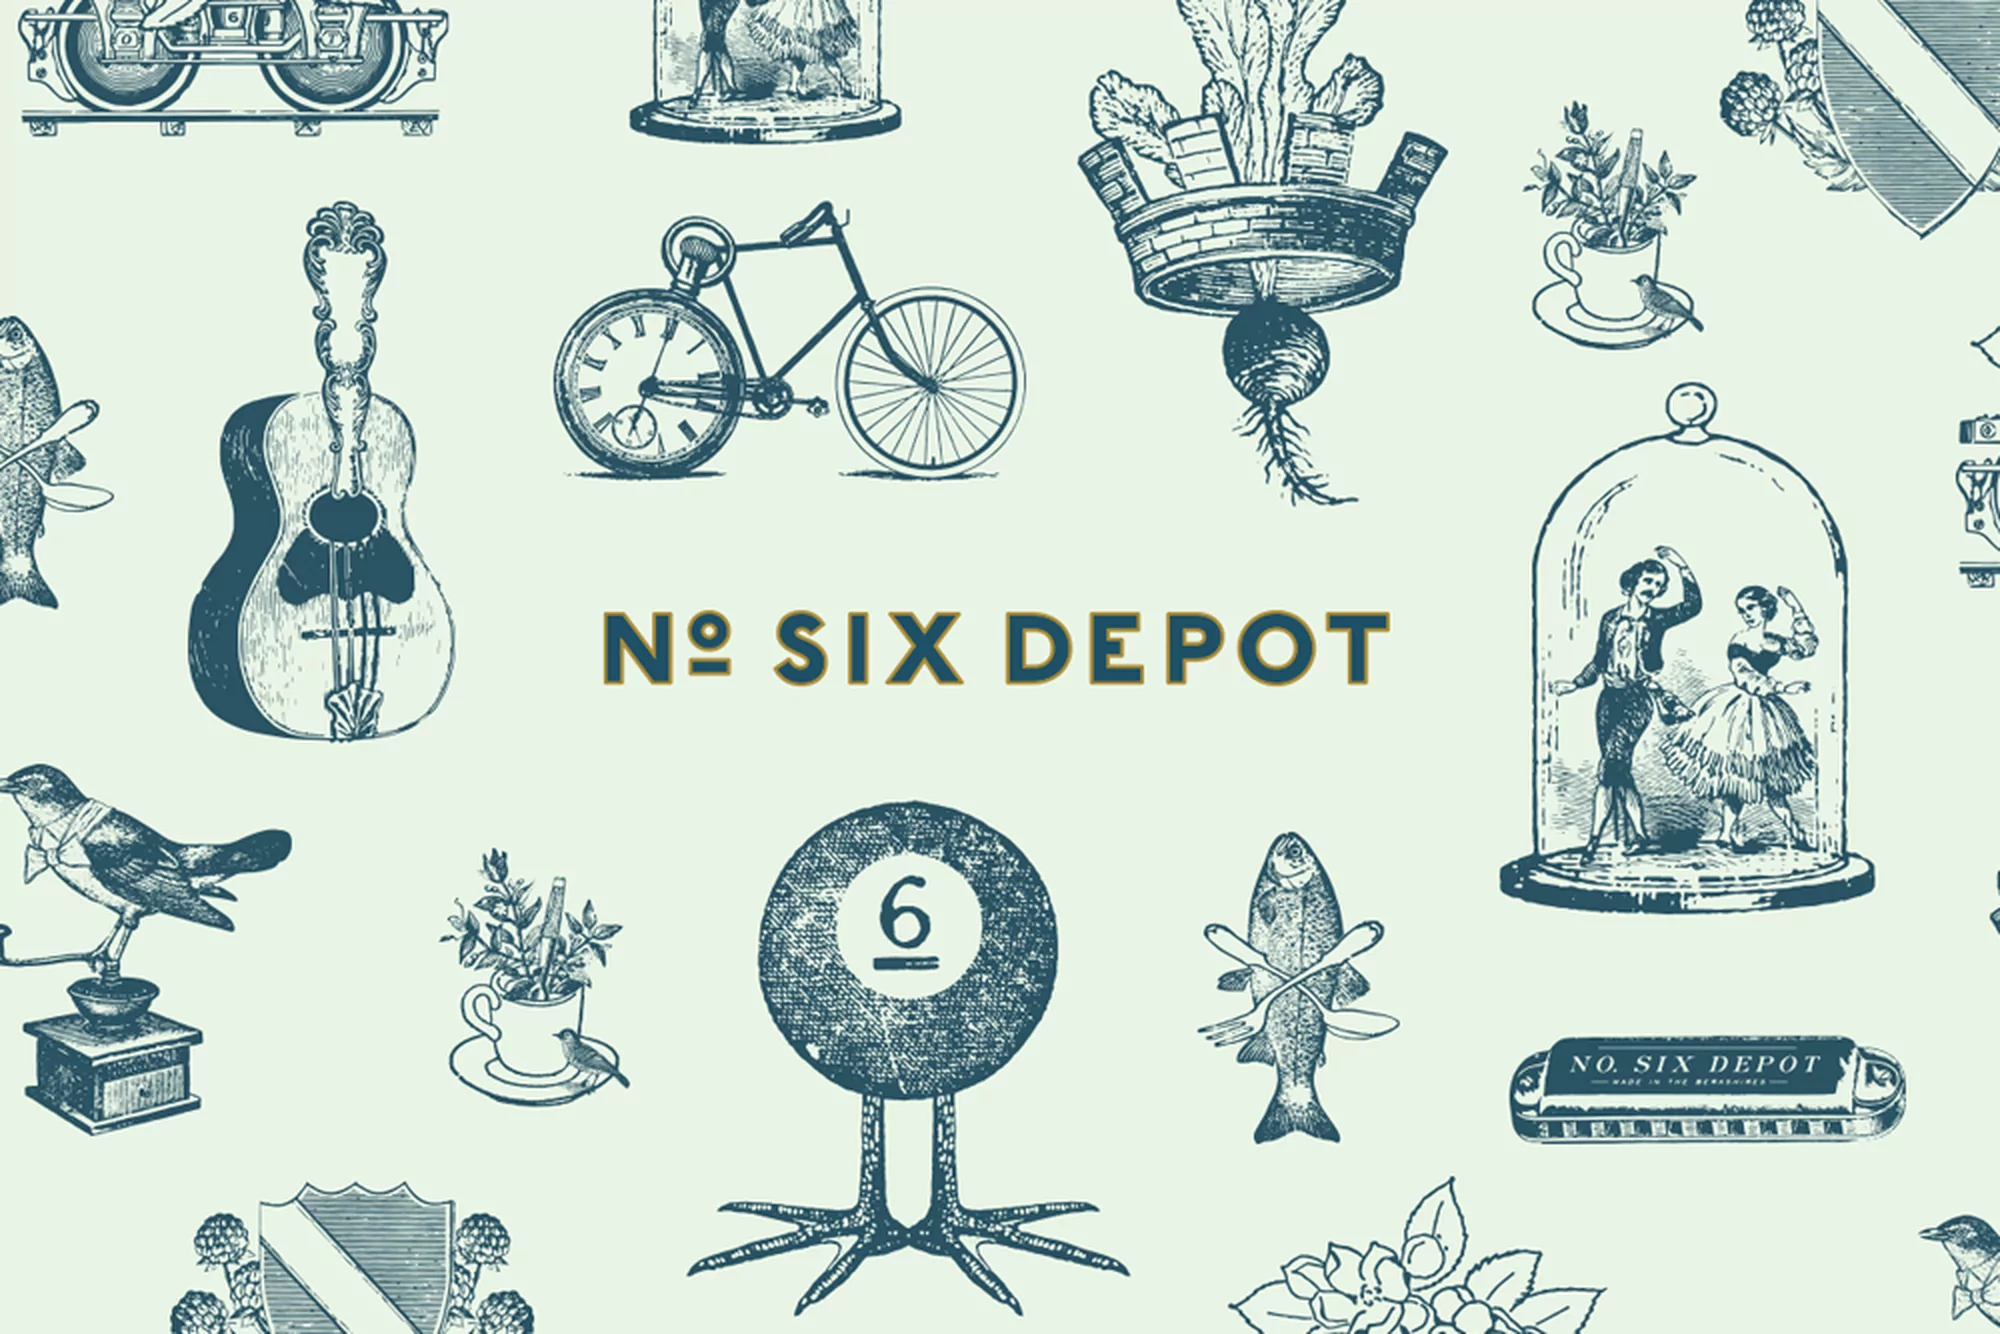 No. Six Depot by Perky Bros